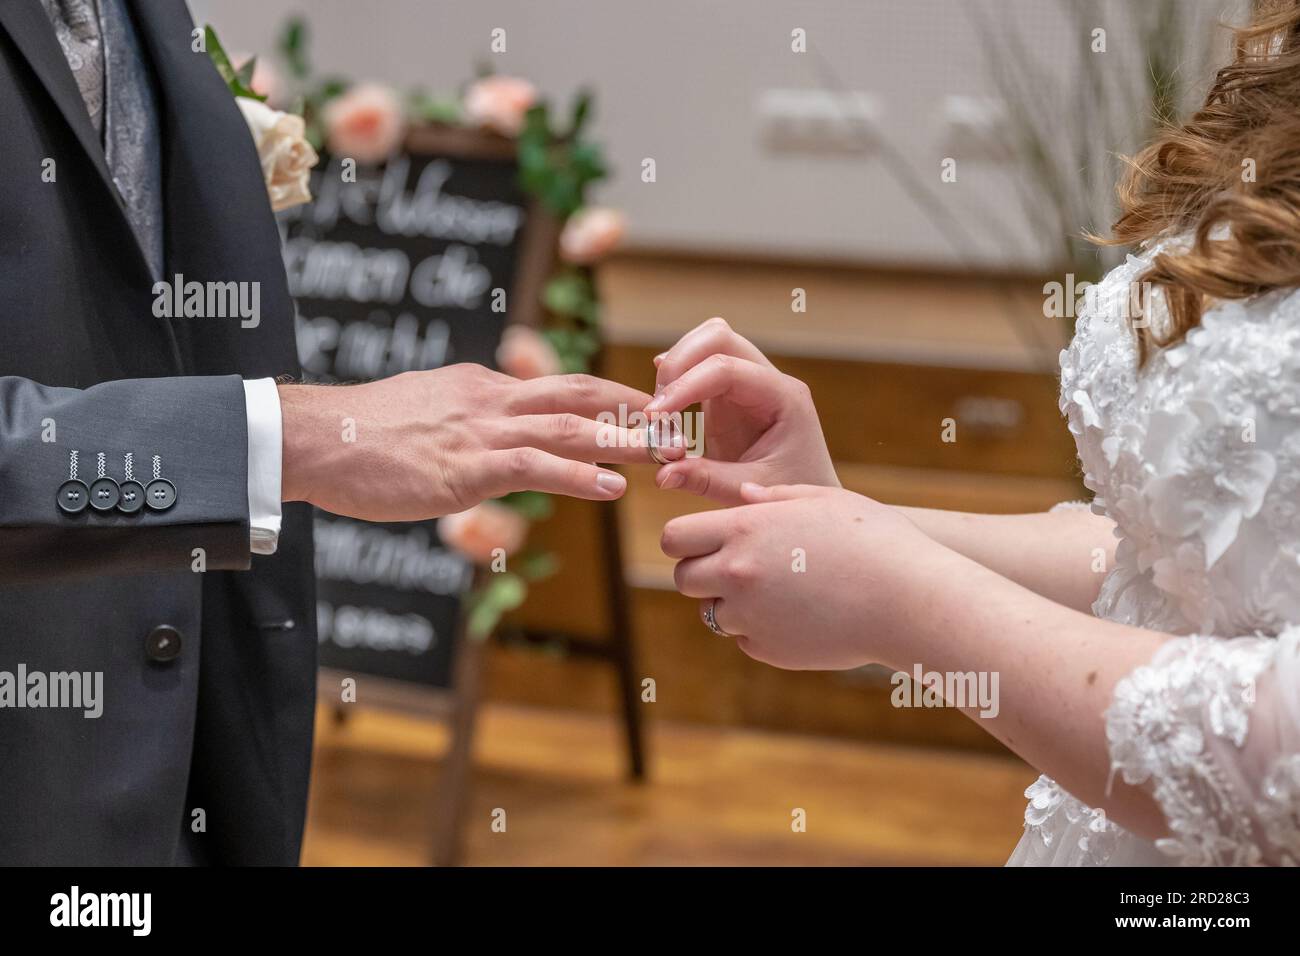 Wedding Rings Exchange in Orthodox Church Stock Image - Image of celebration,  festive: 137056447